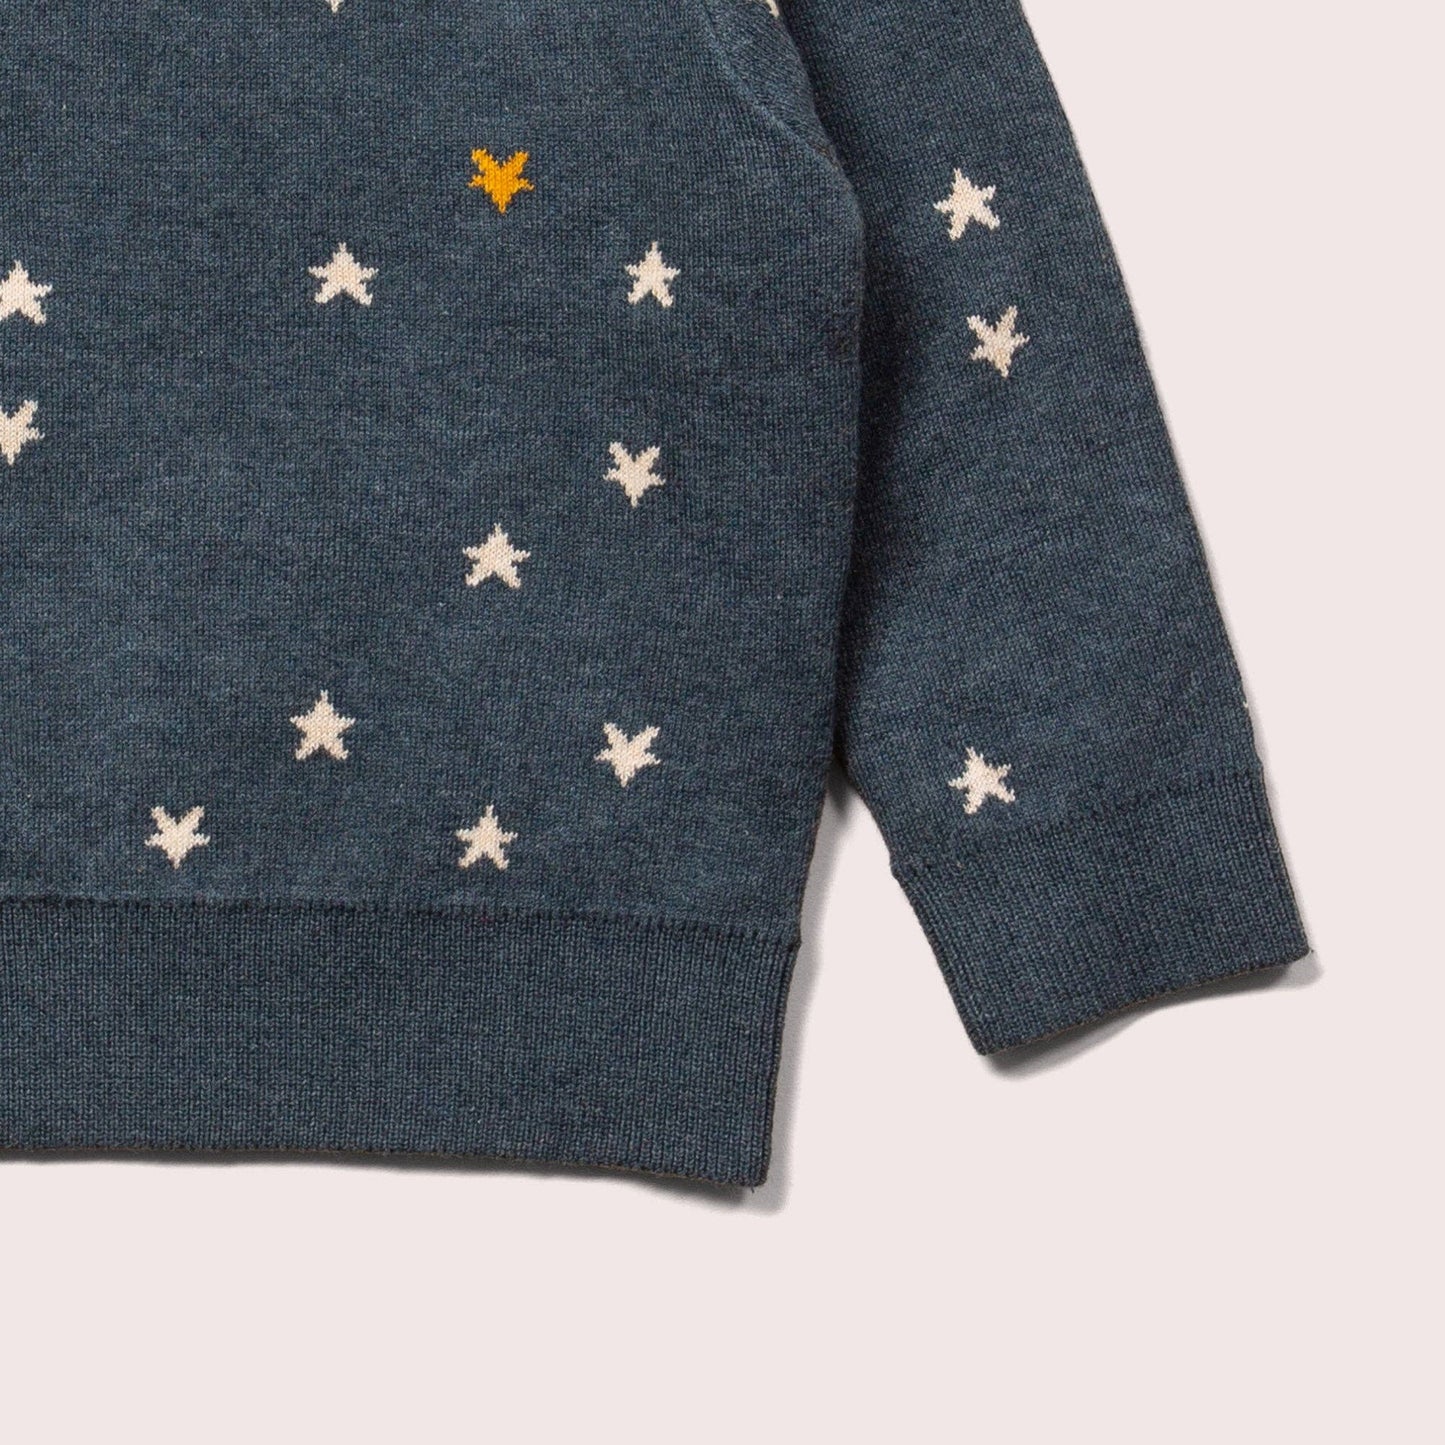 Knitted Sweater - Navy Golden Stars